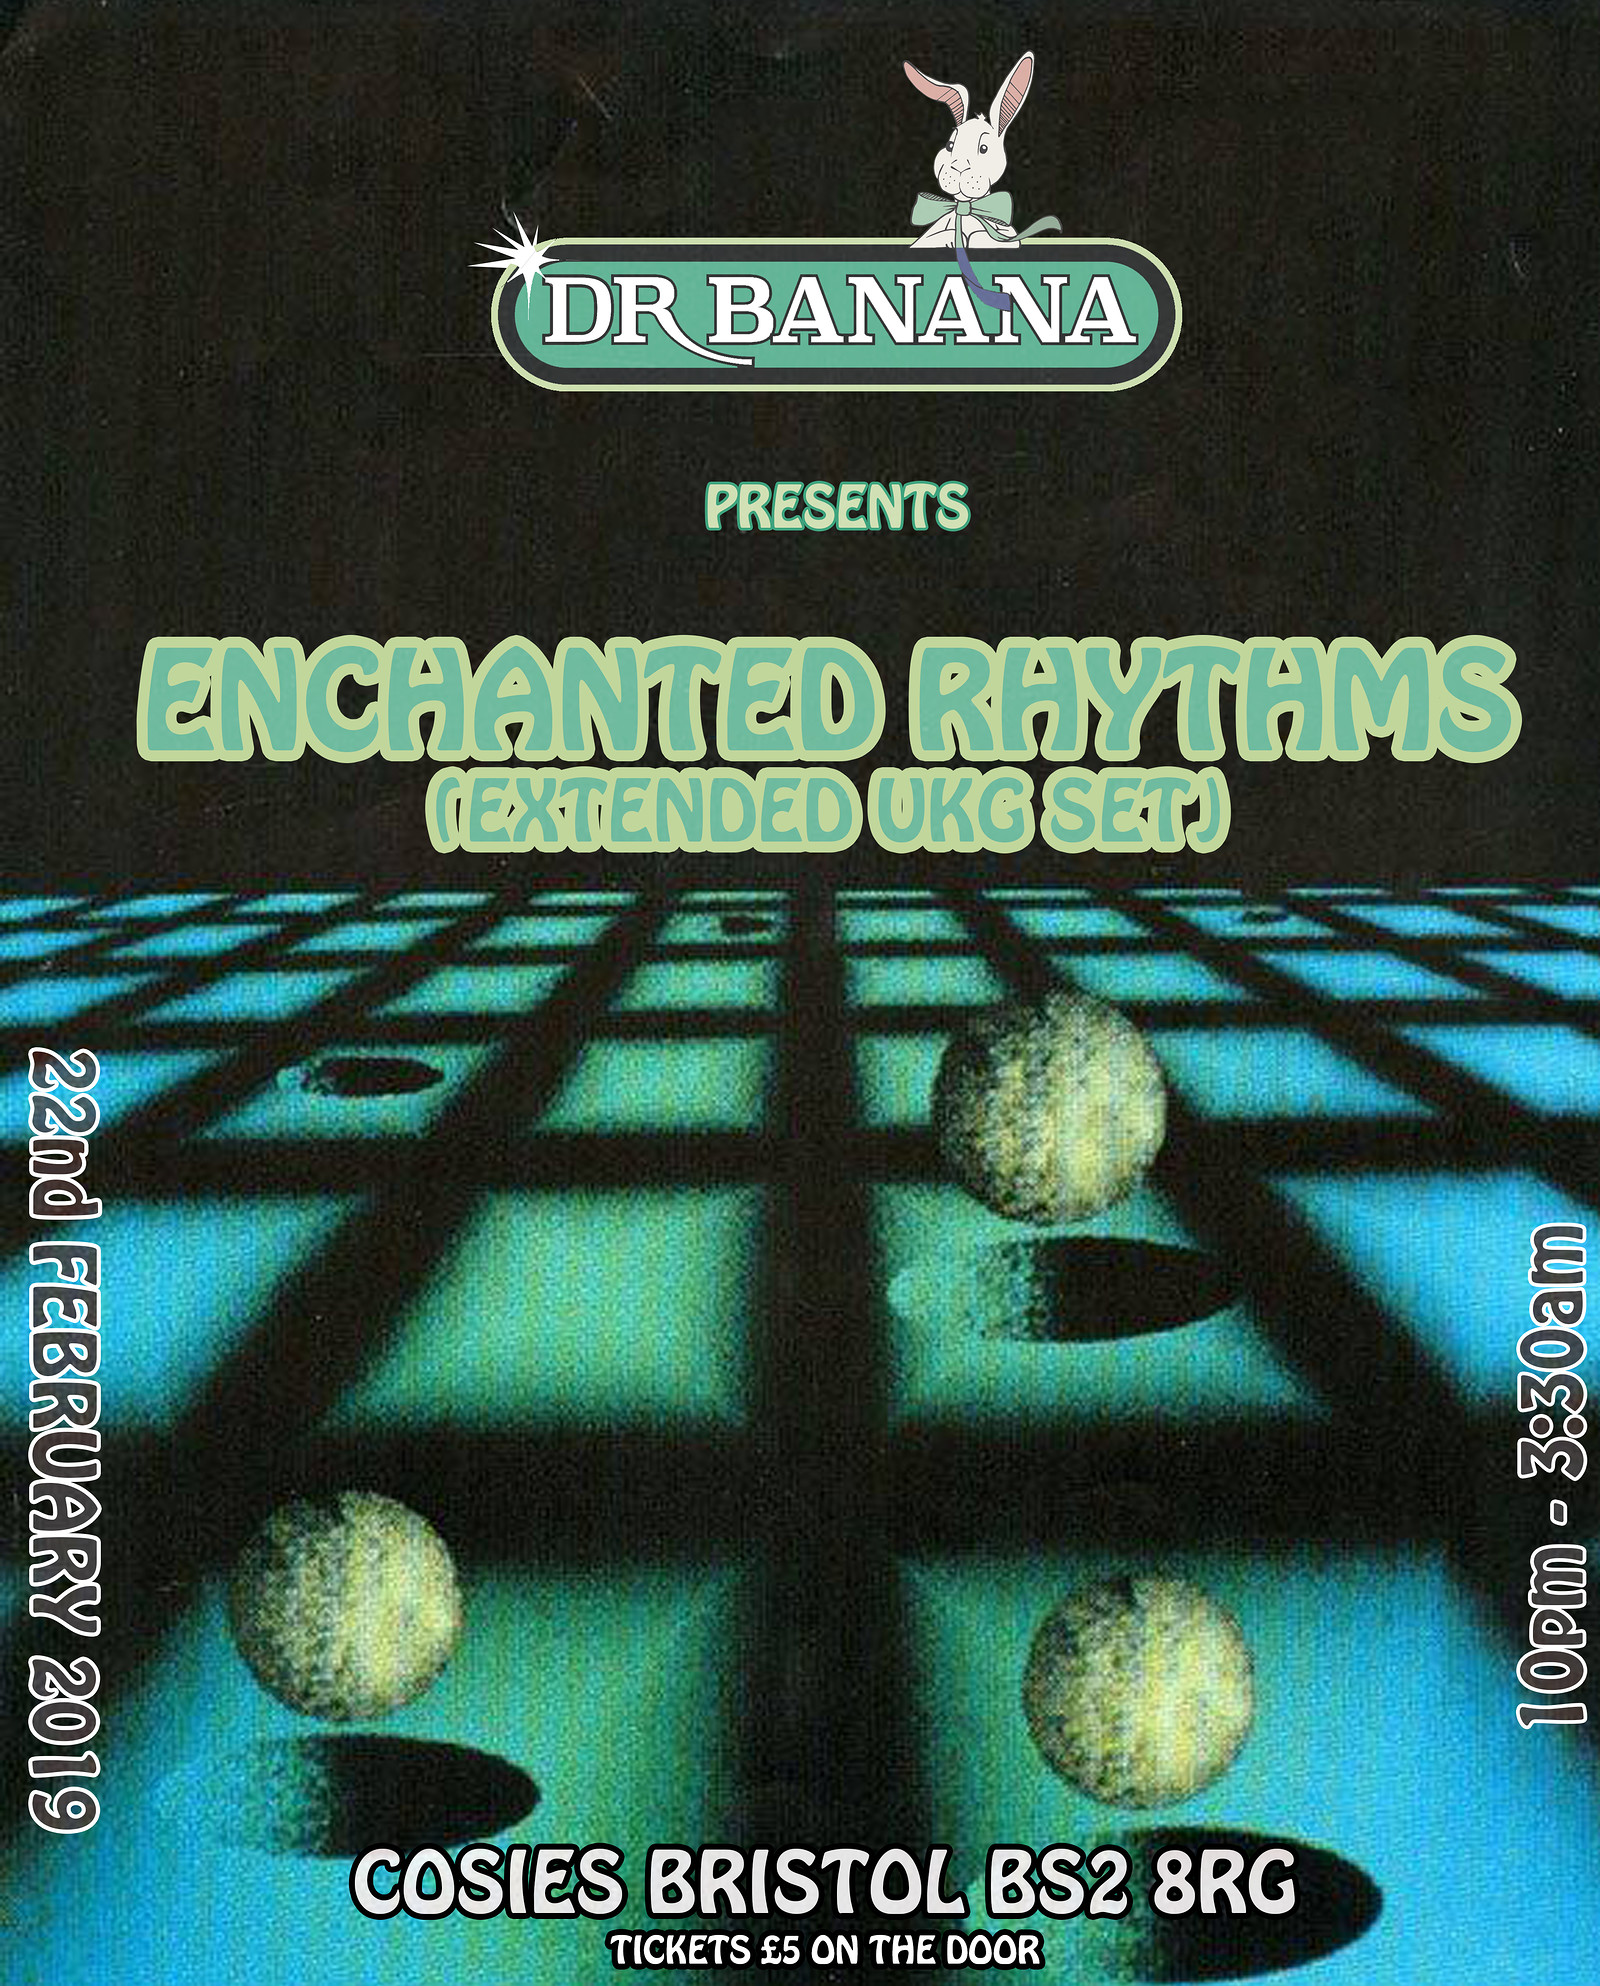 Dr Banana Presents Enchanted Rhythms (Extended UKG at Cosies